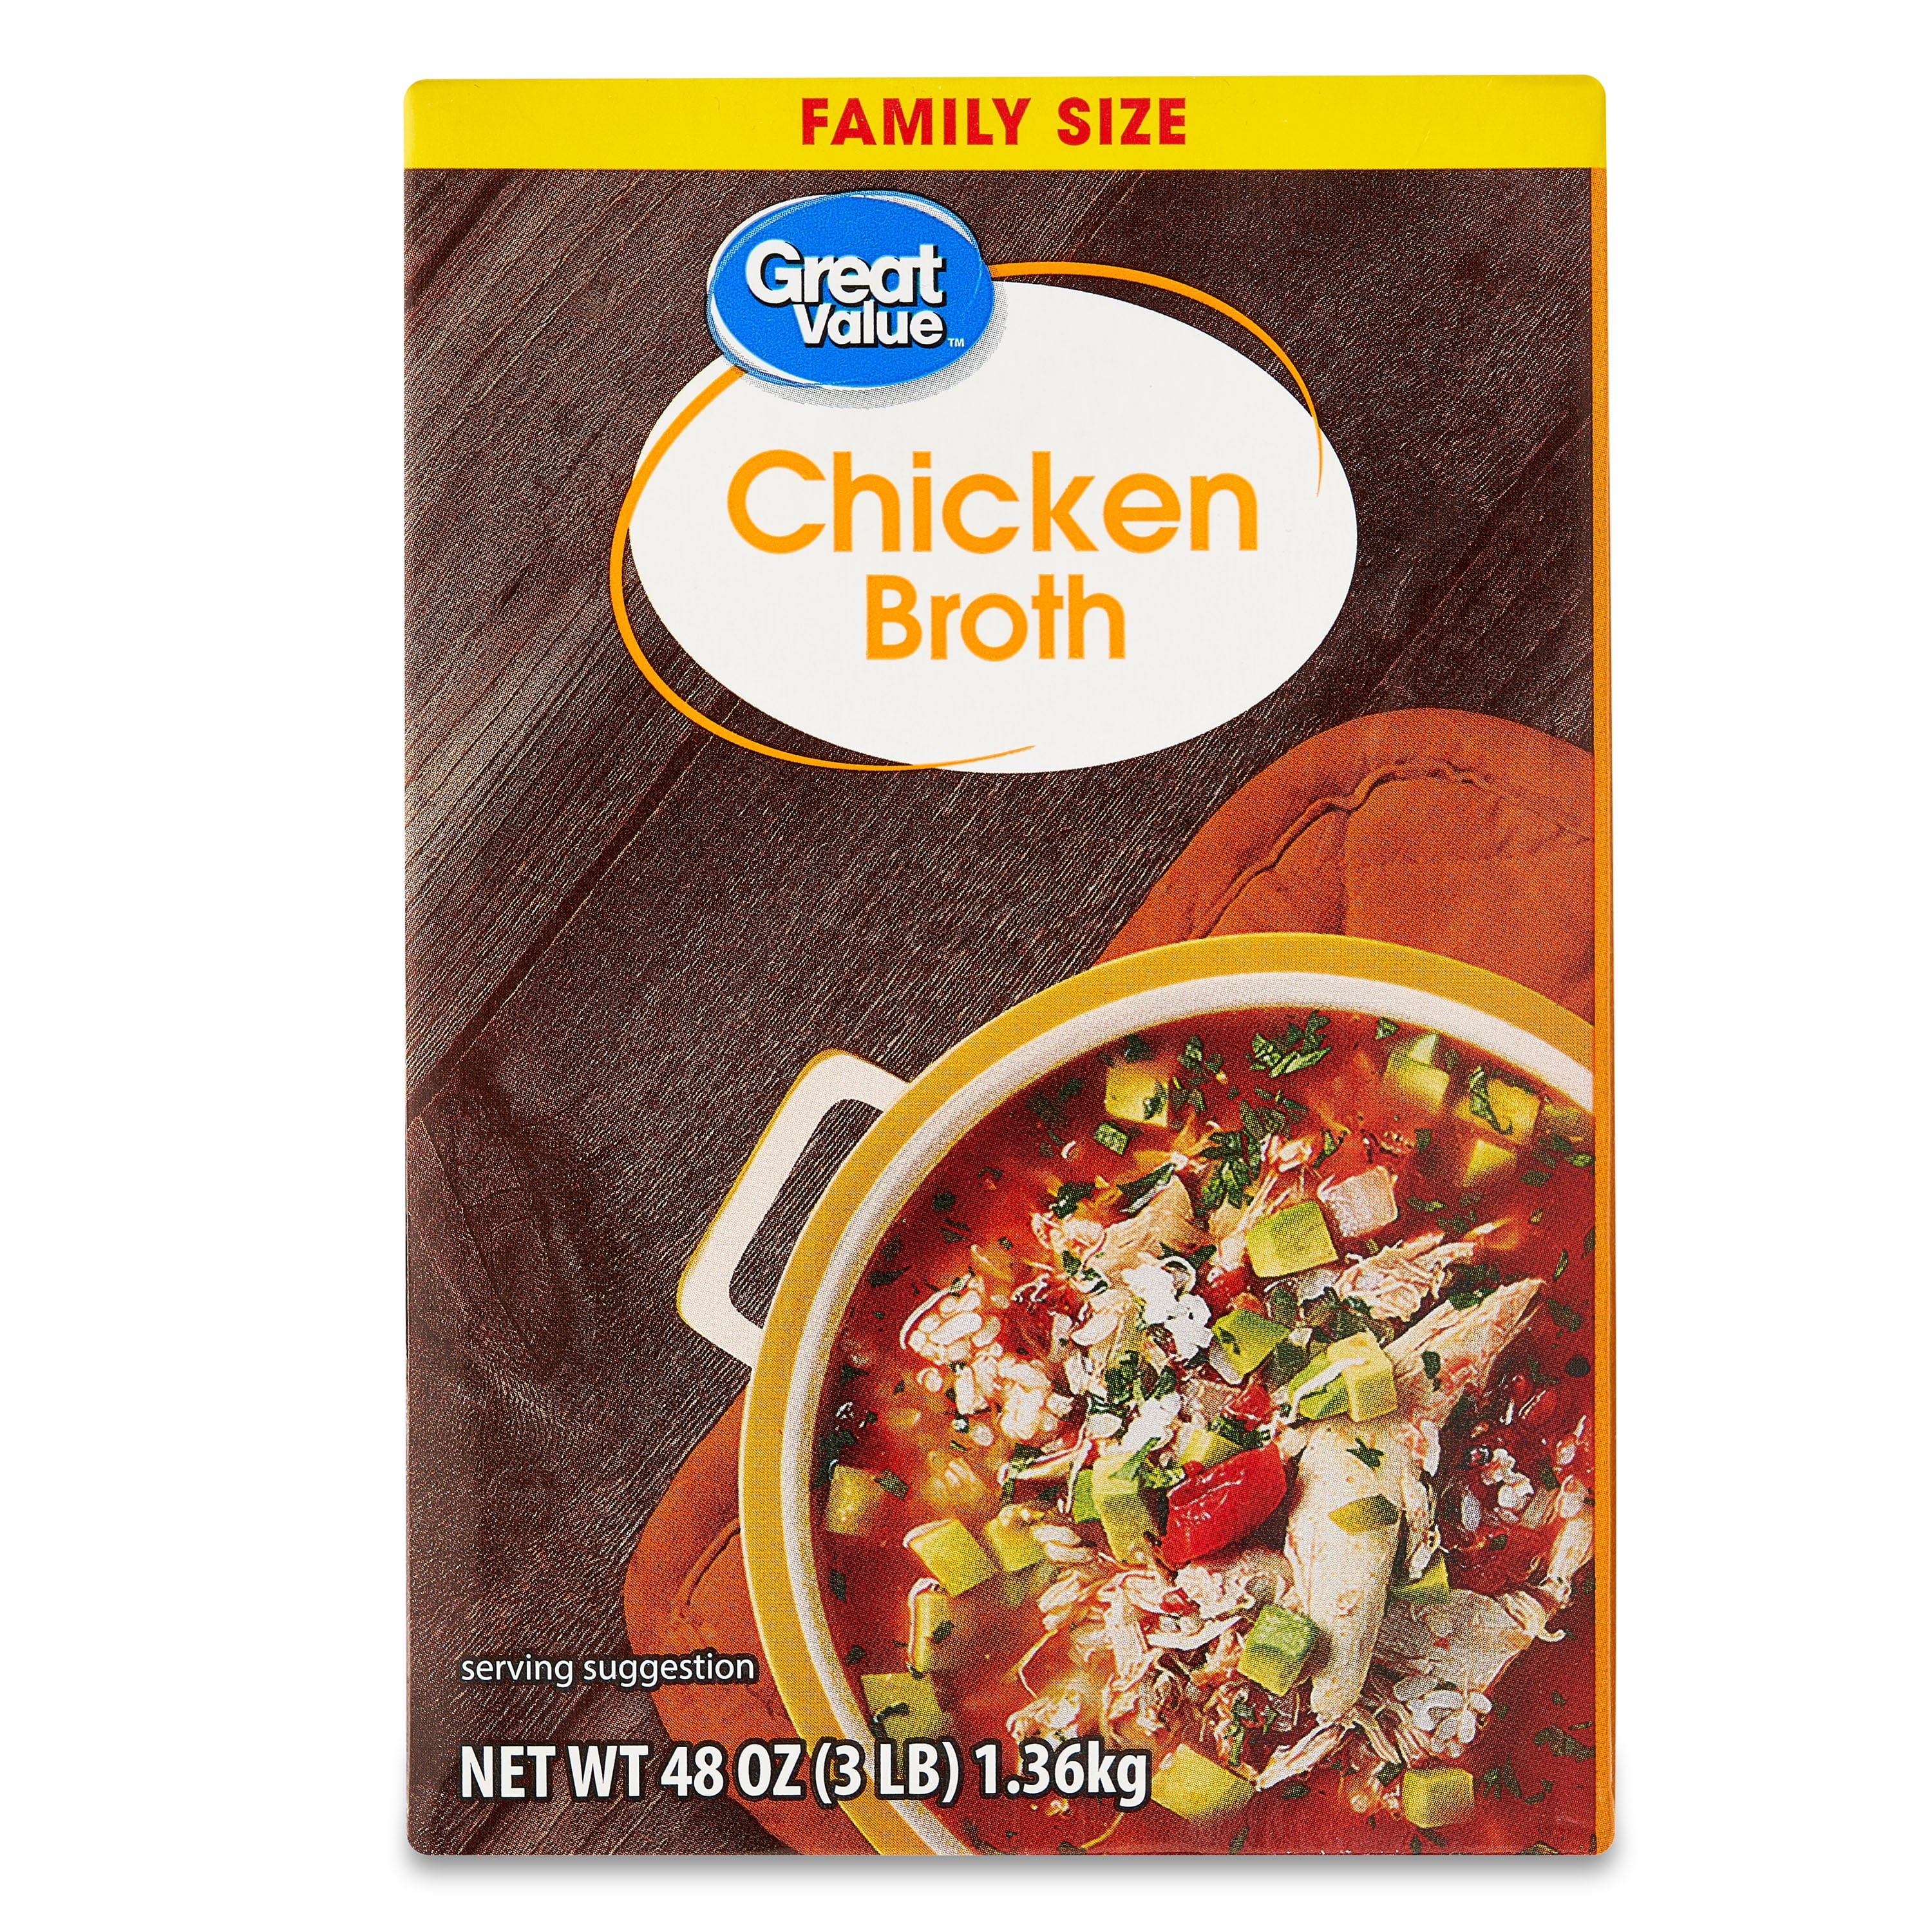 Great Value Chicken Broth, 48 oz